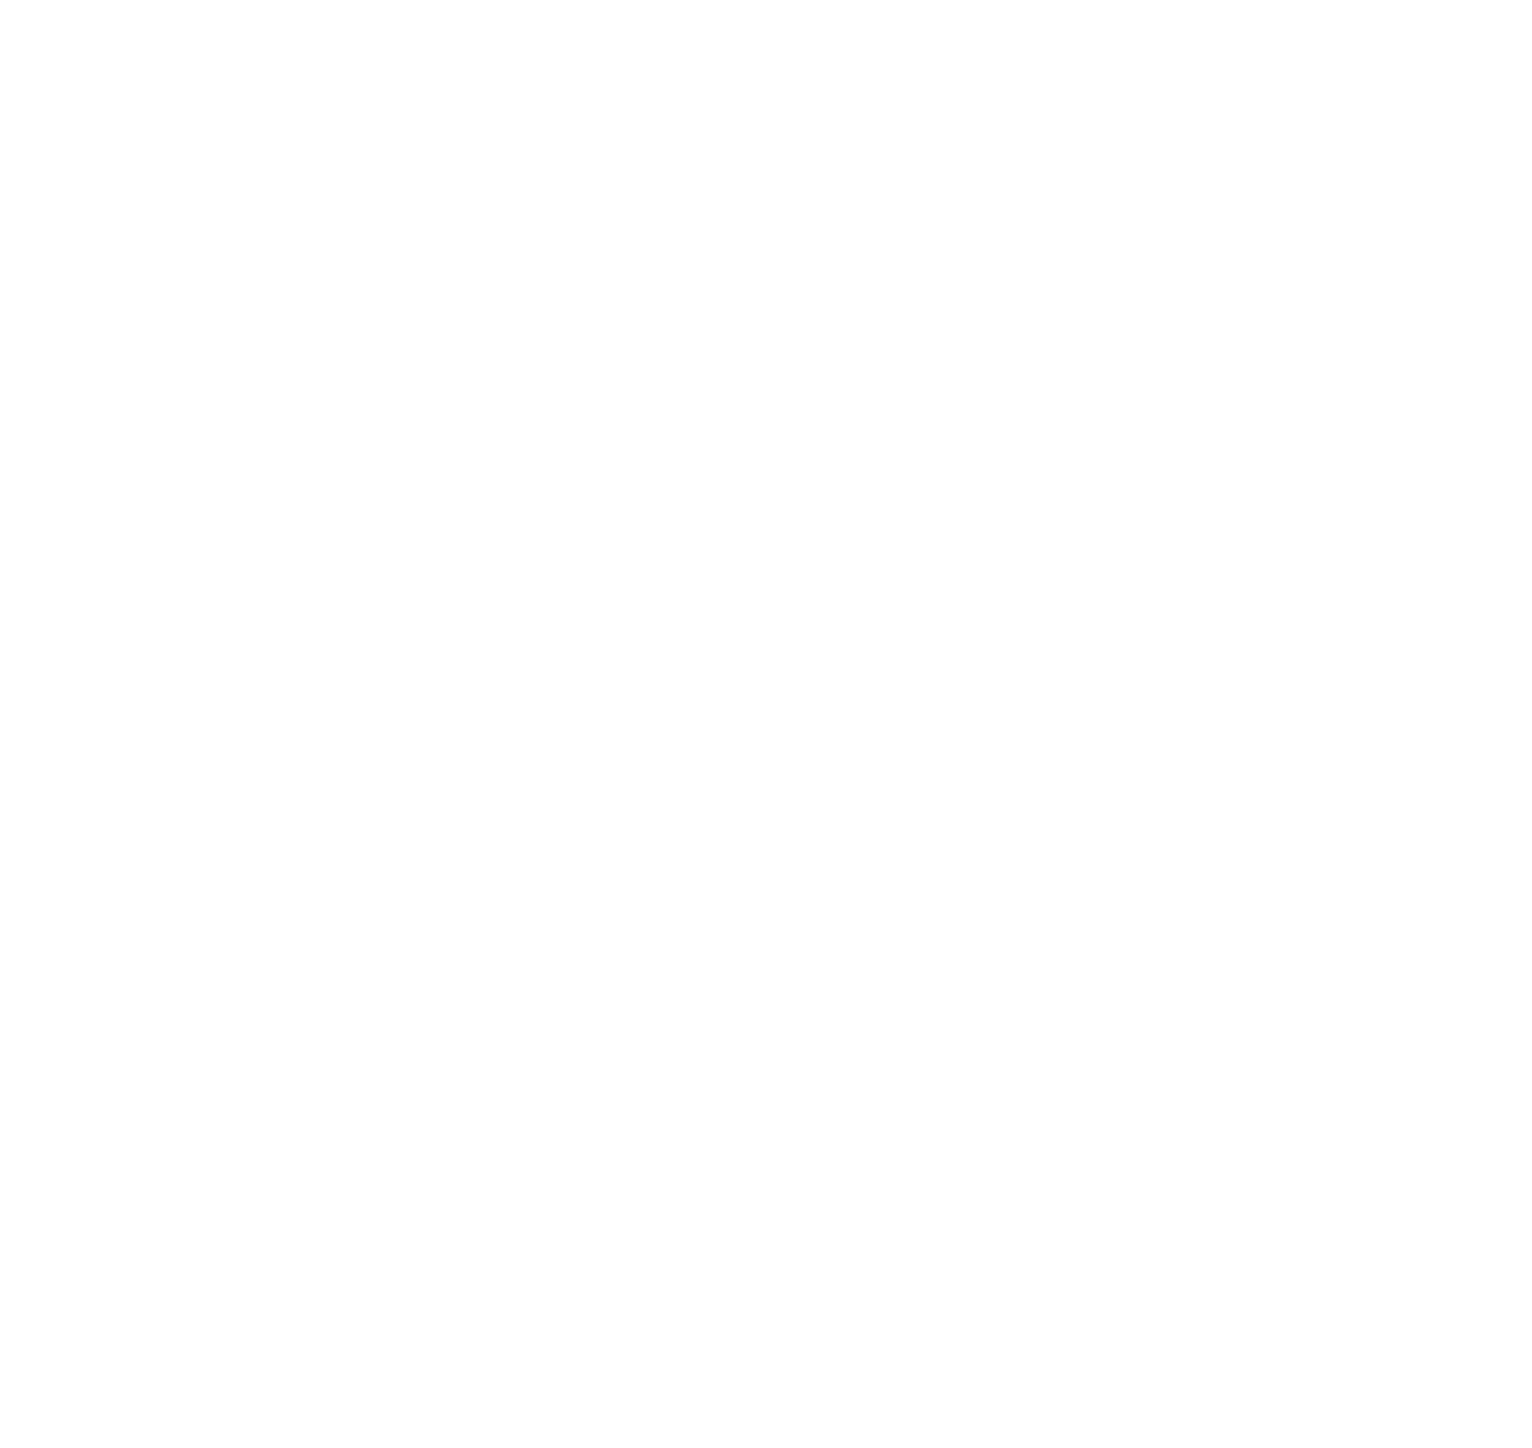 LondonMetric Property logo pour fonds sombres (PNG transparent)